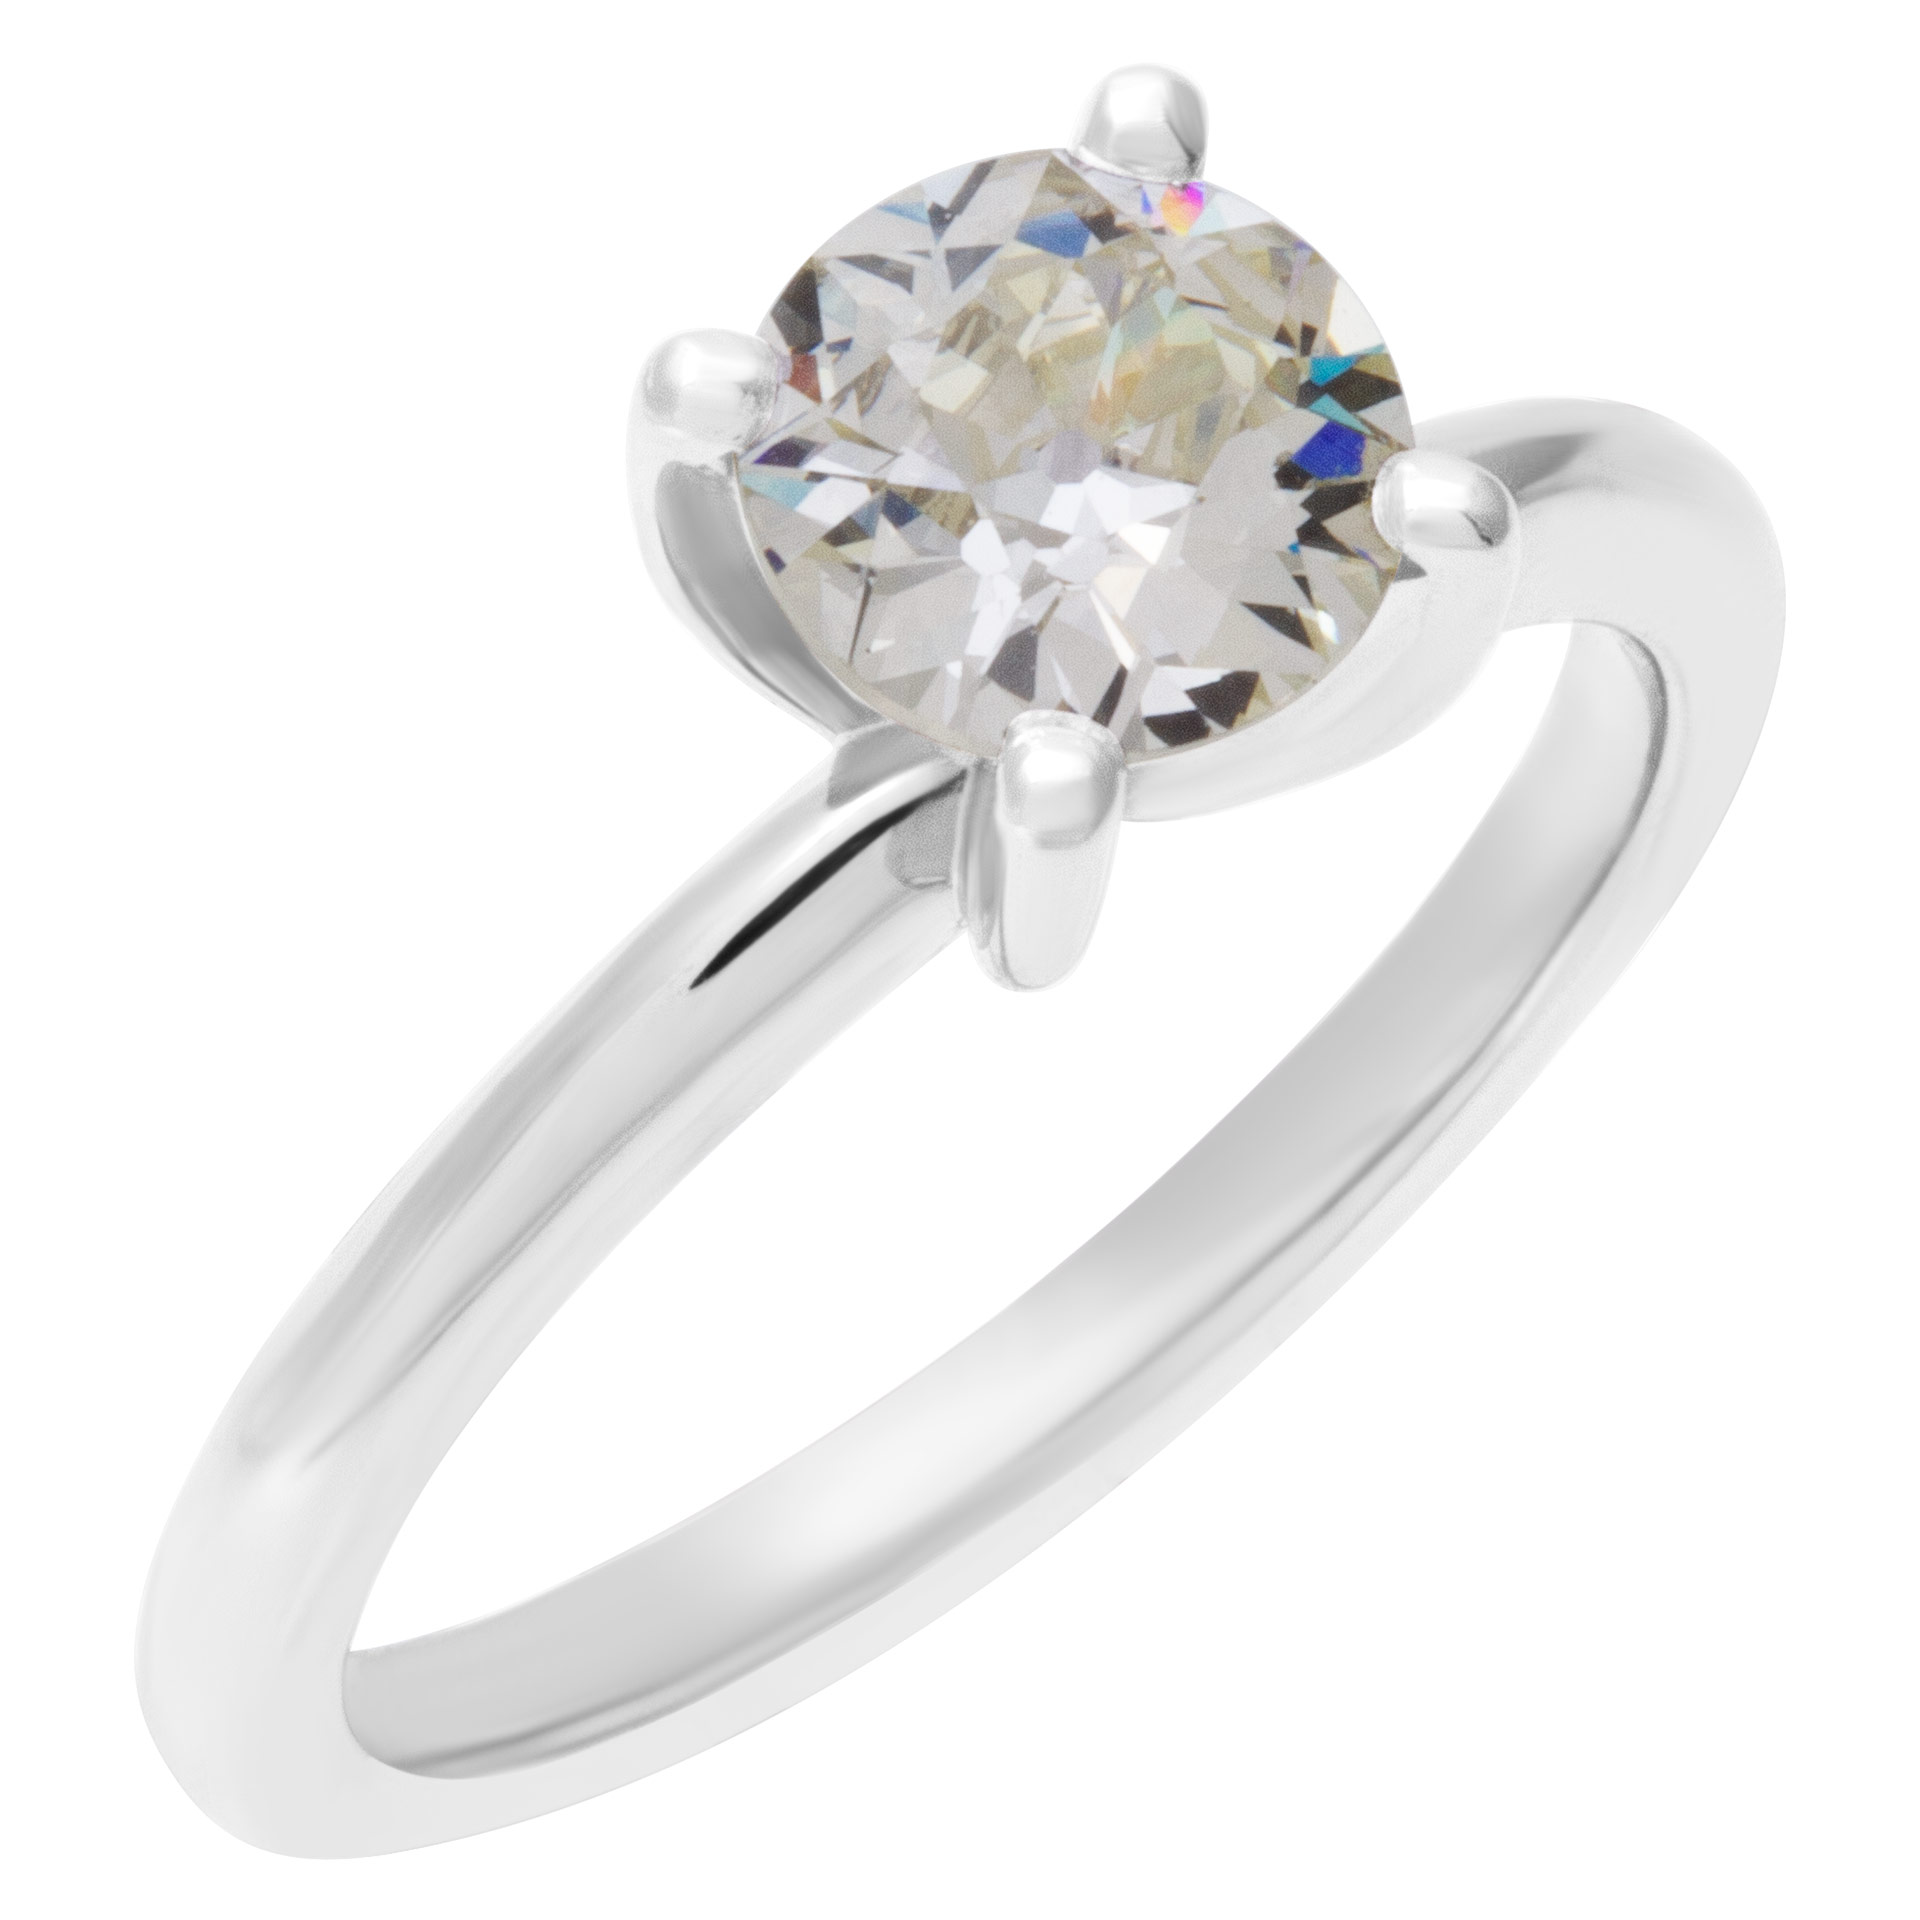 GIA certified old europeam brilliant cut diamond 1.09 carat (O to P range, VS1 clarity) solitaire ring set in platinum image 5